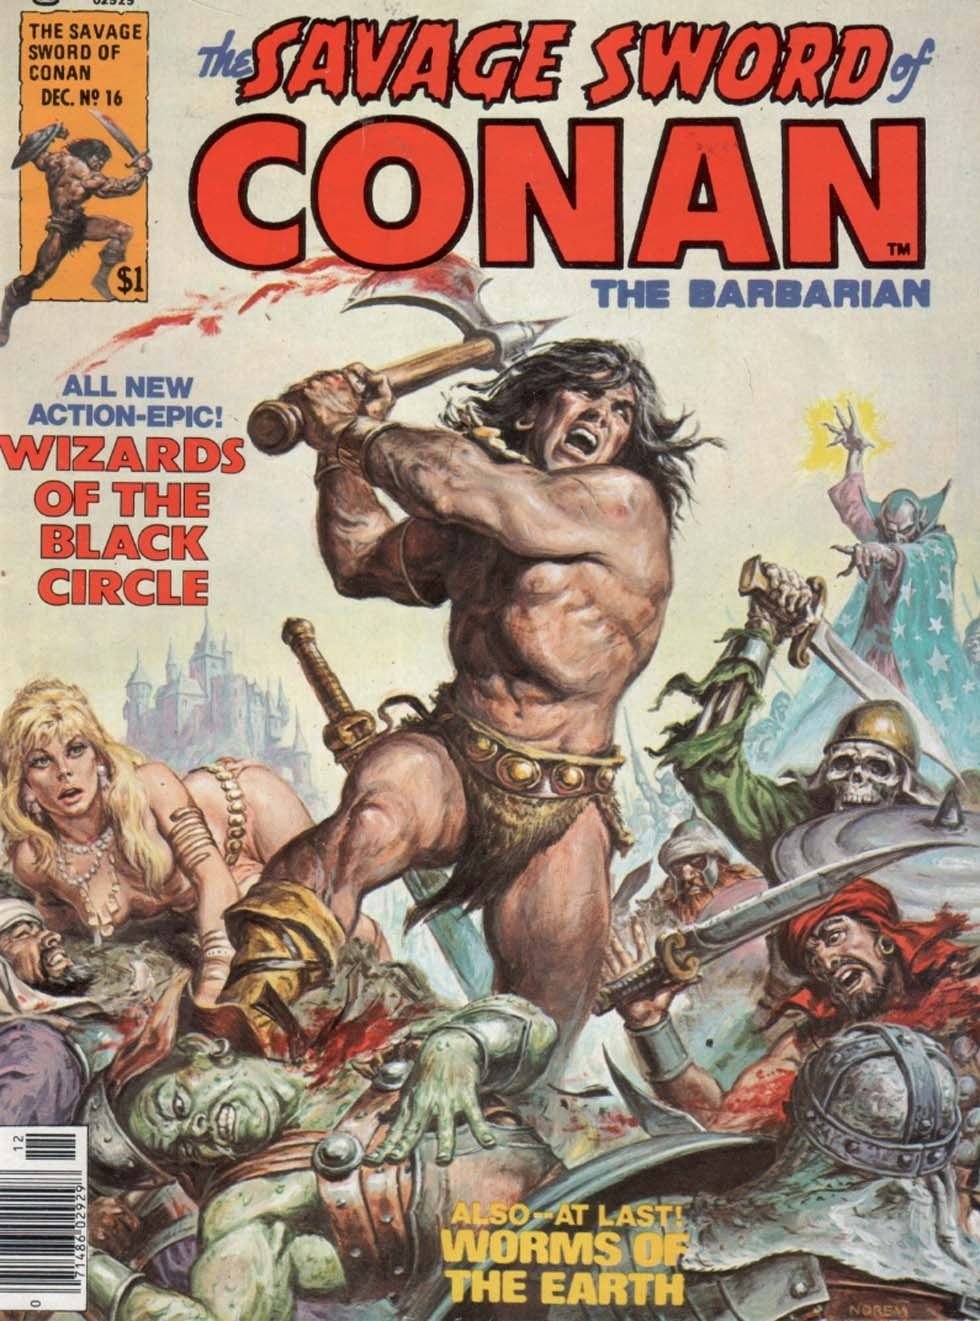 Conan.jpg